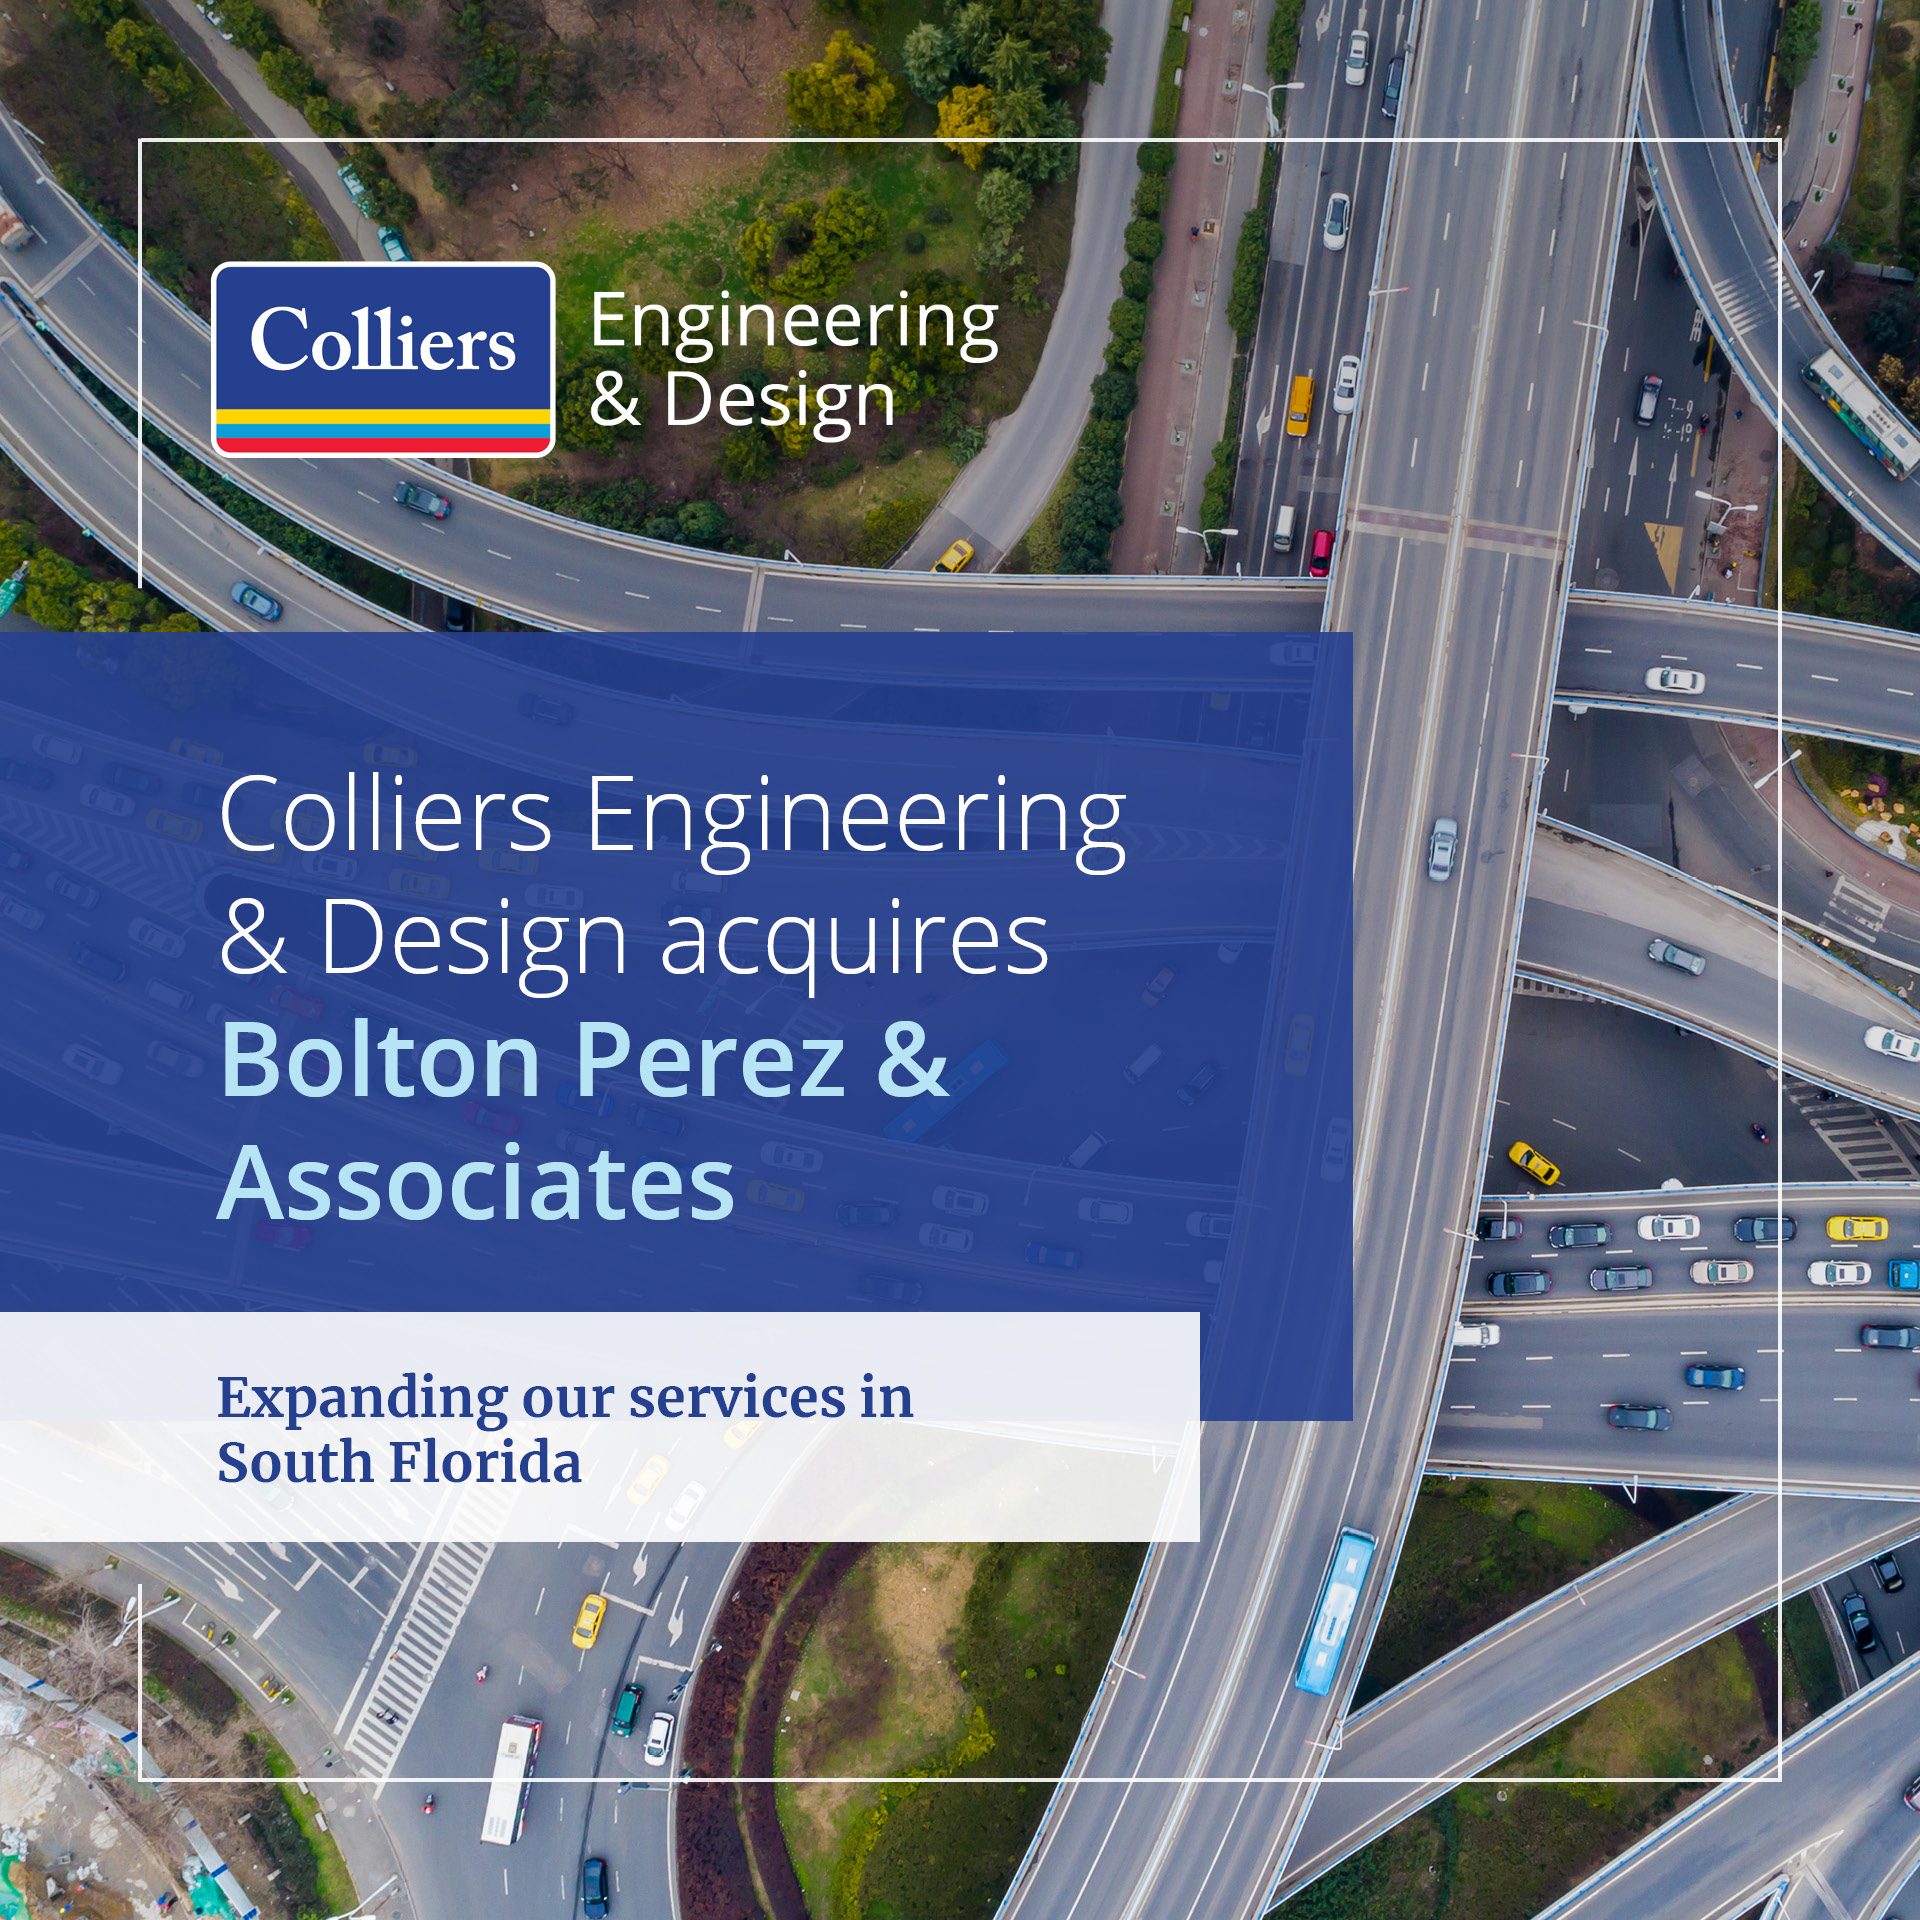 Colliers Engineering acquires Bolton Perez & Associates